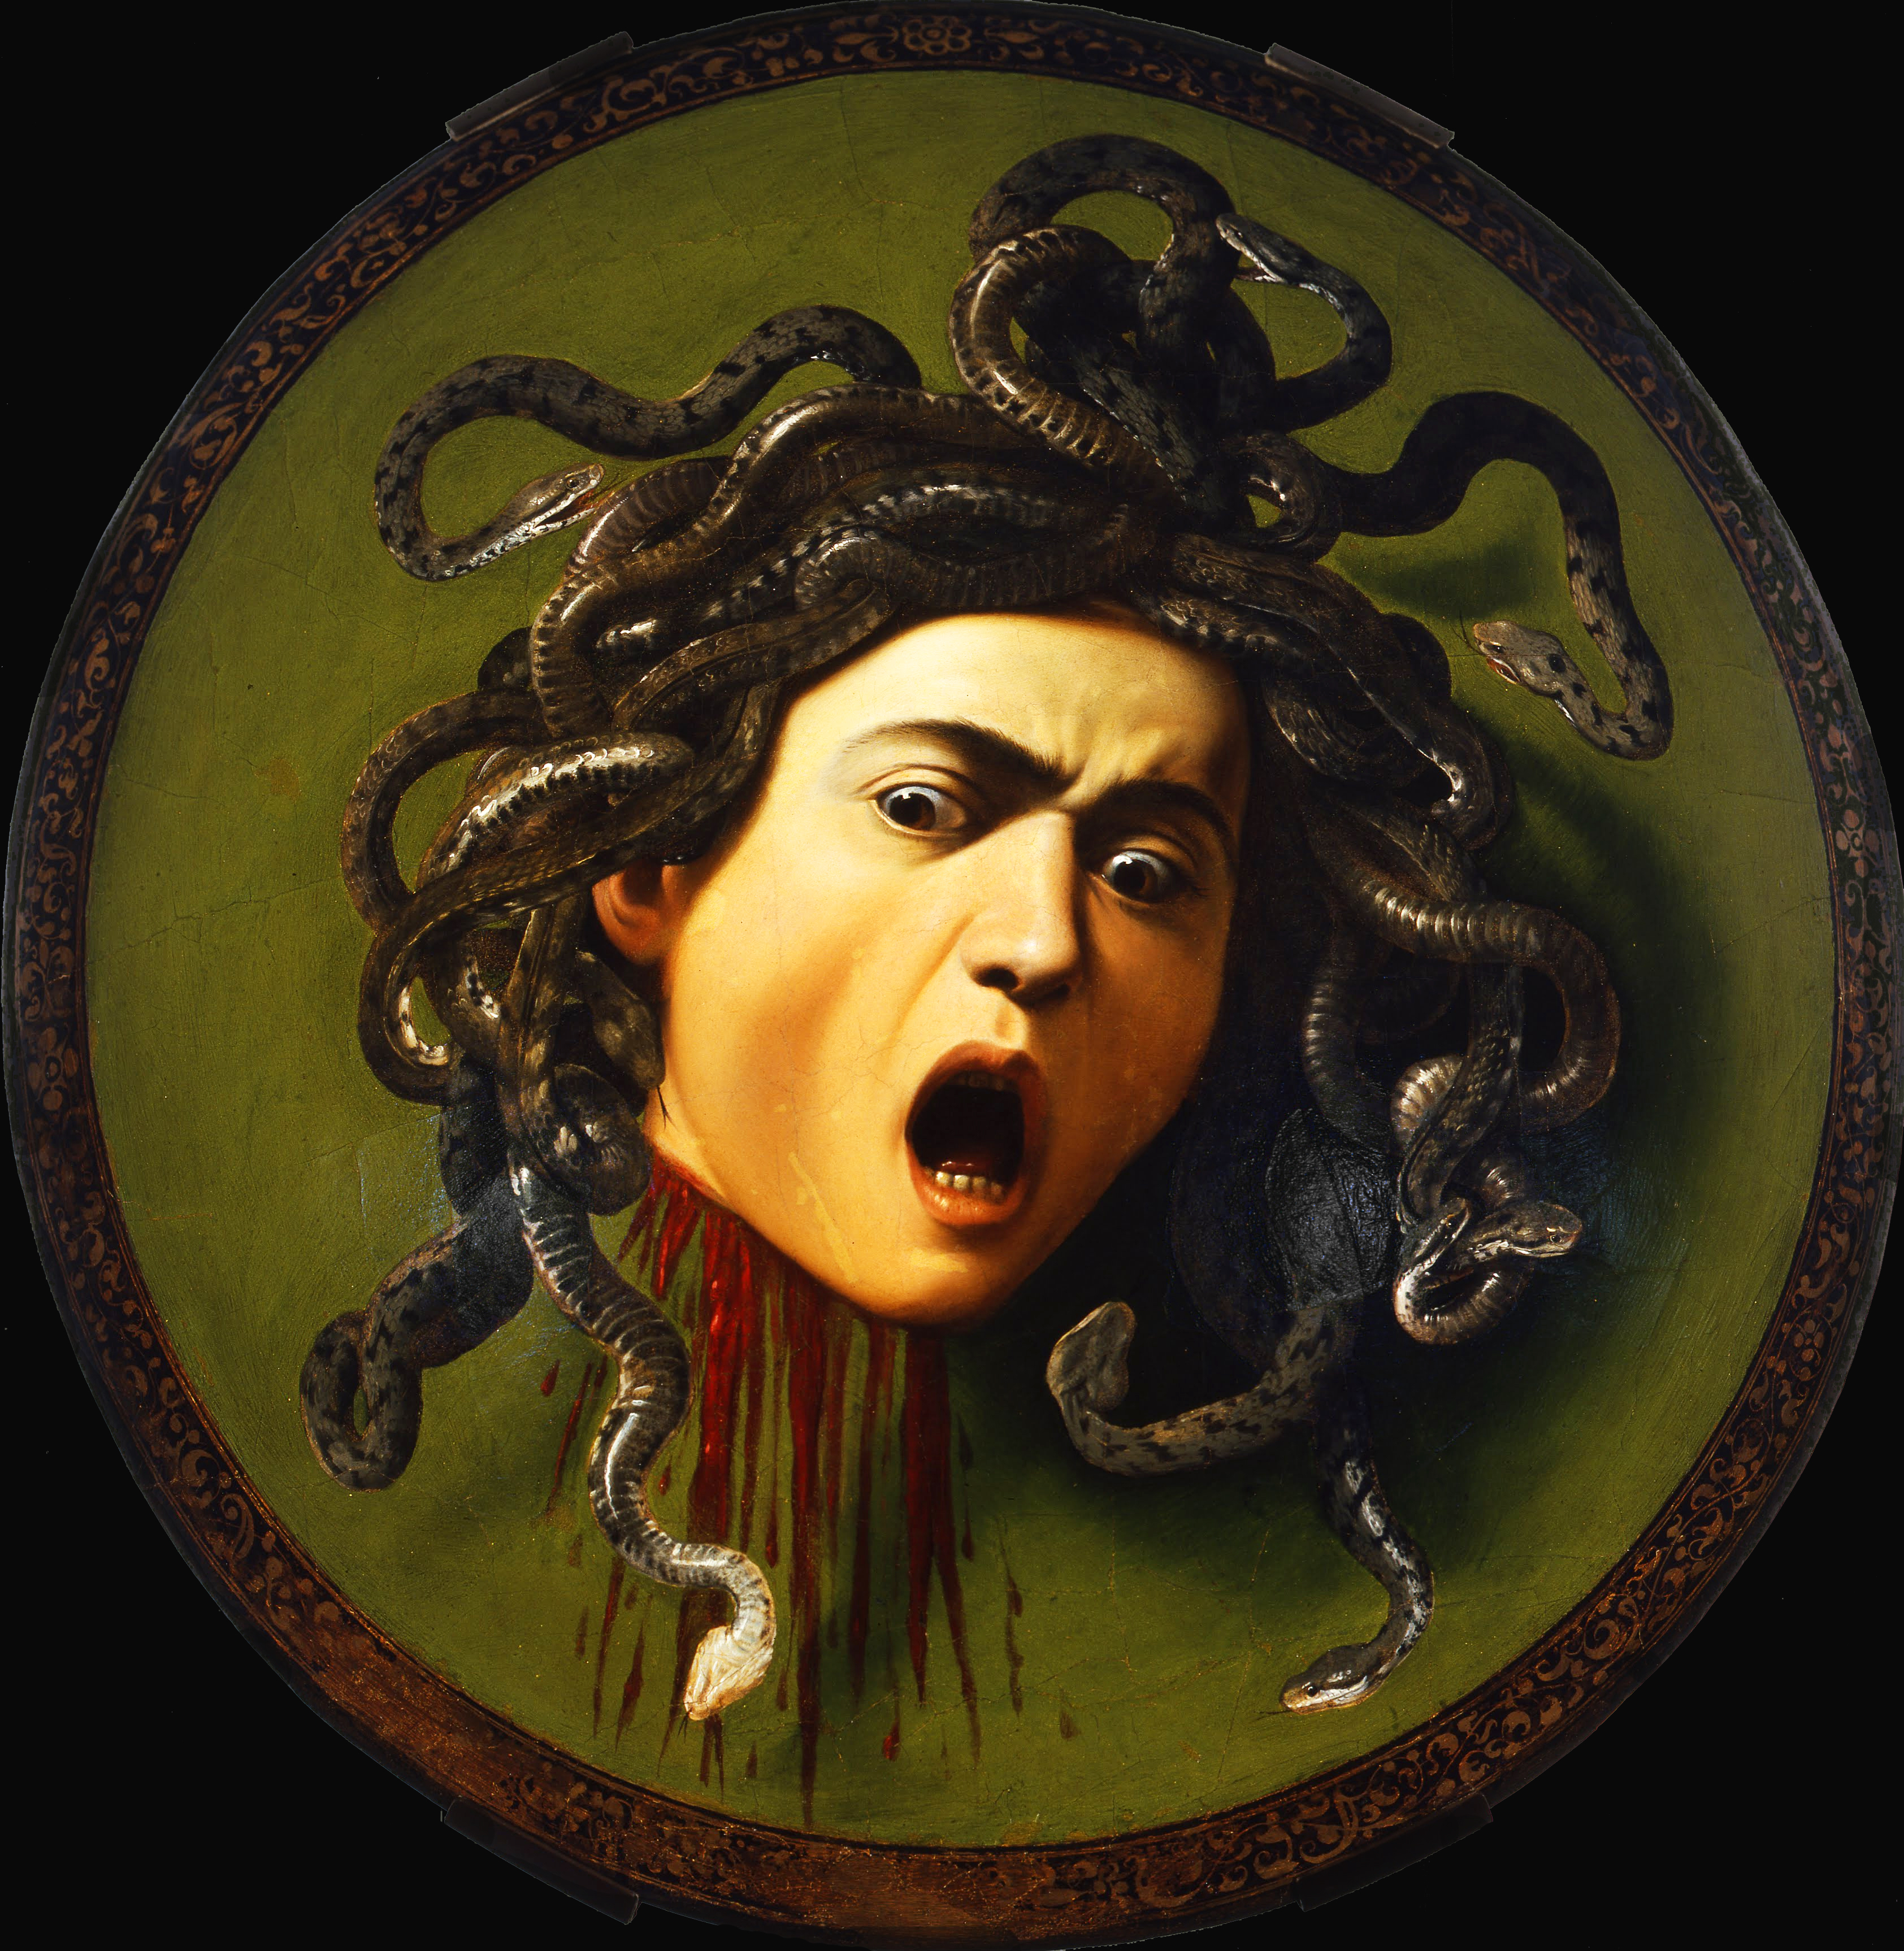 The Timeless Myth of Medusa, a Rape Victim Turned Into a Monster